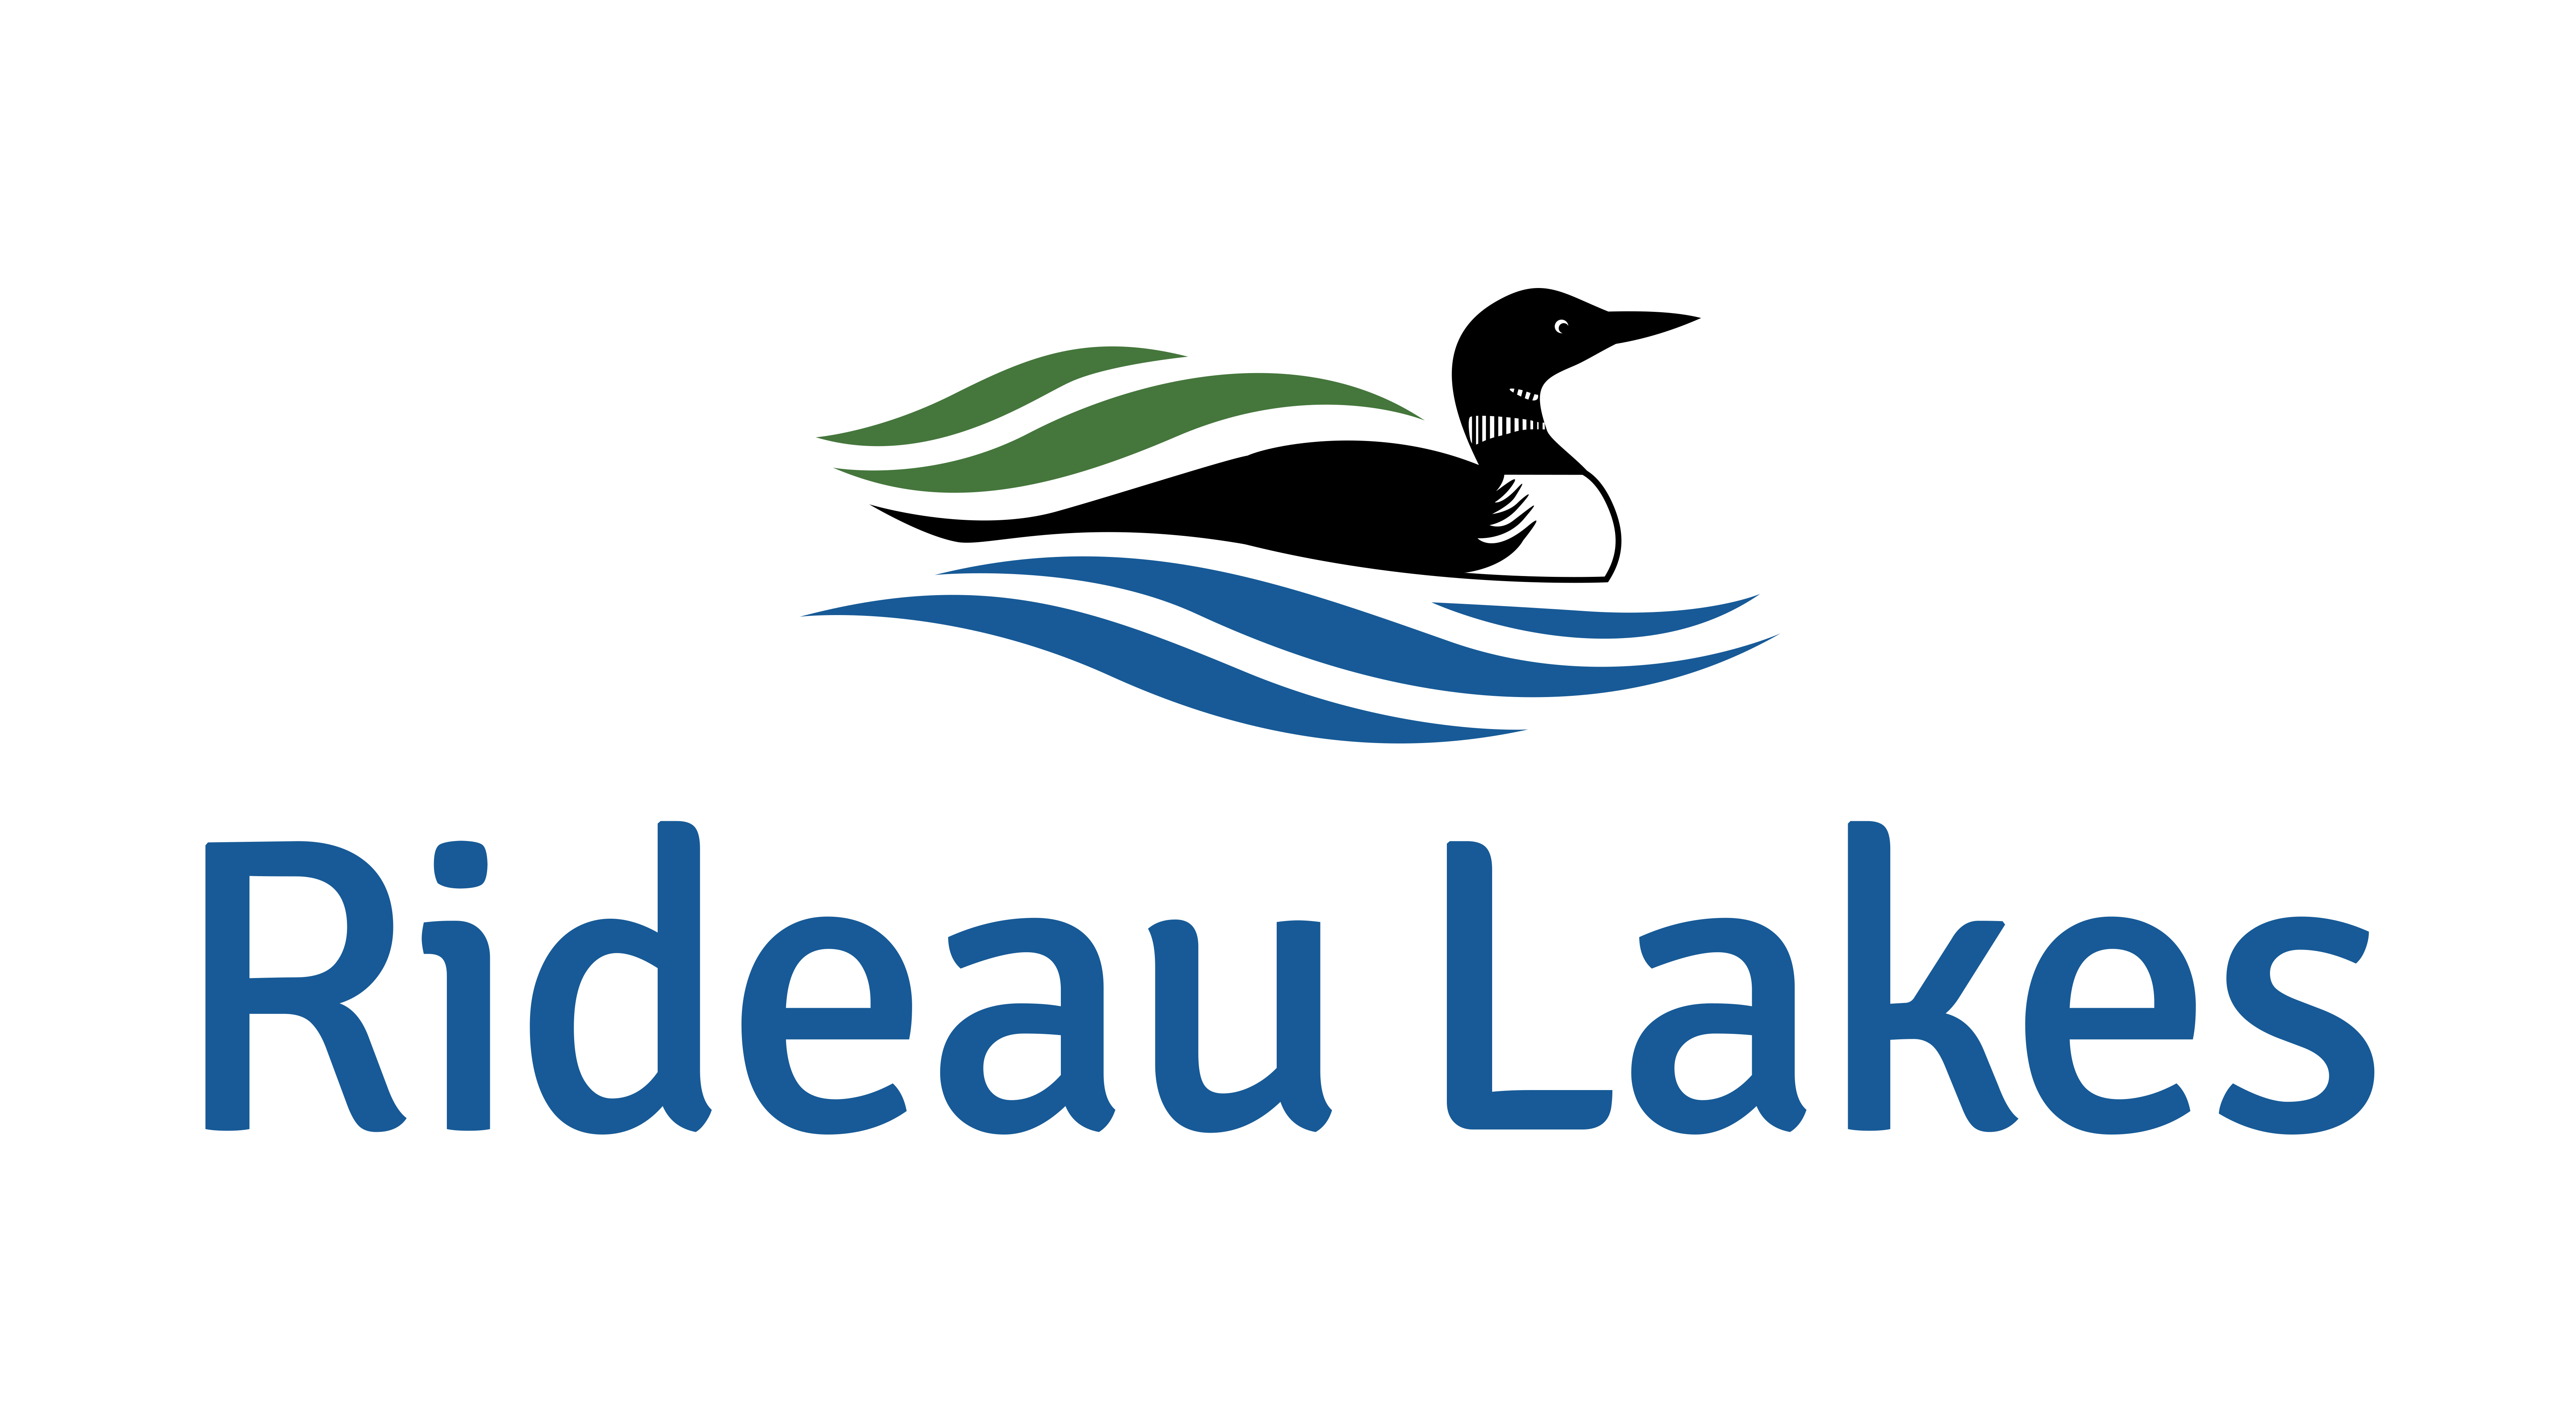 Organization logo of The Township of Rideau Lakes